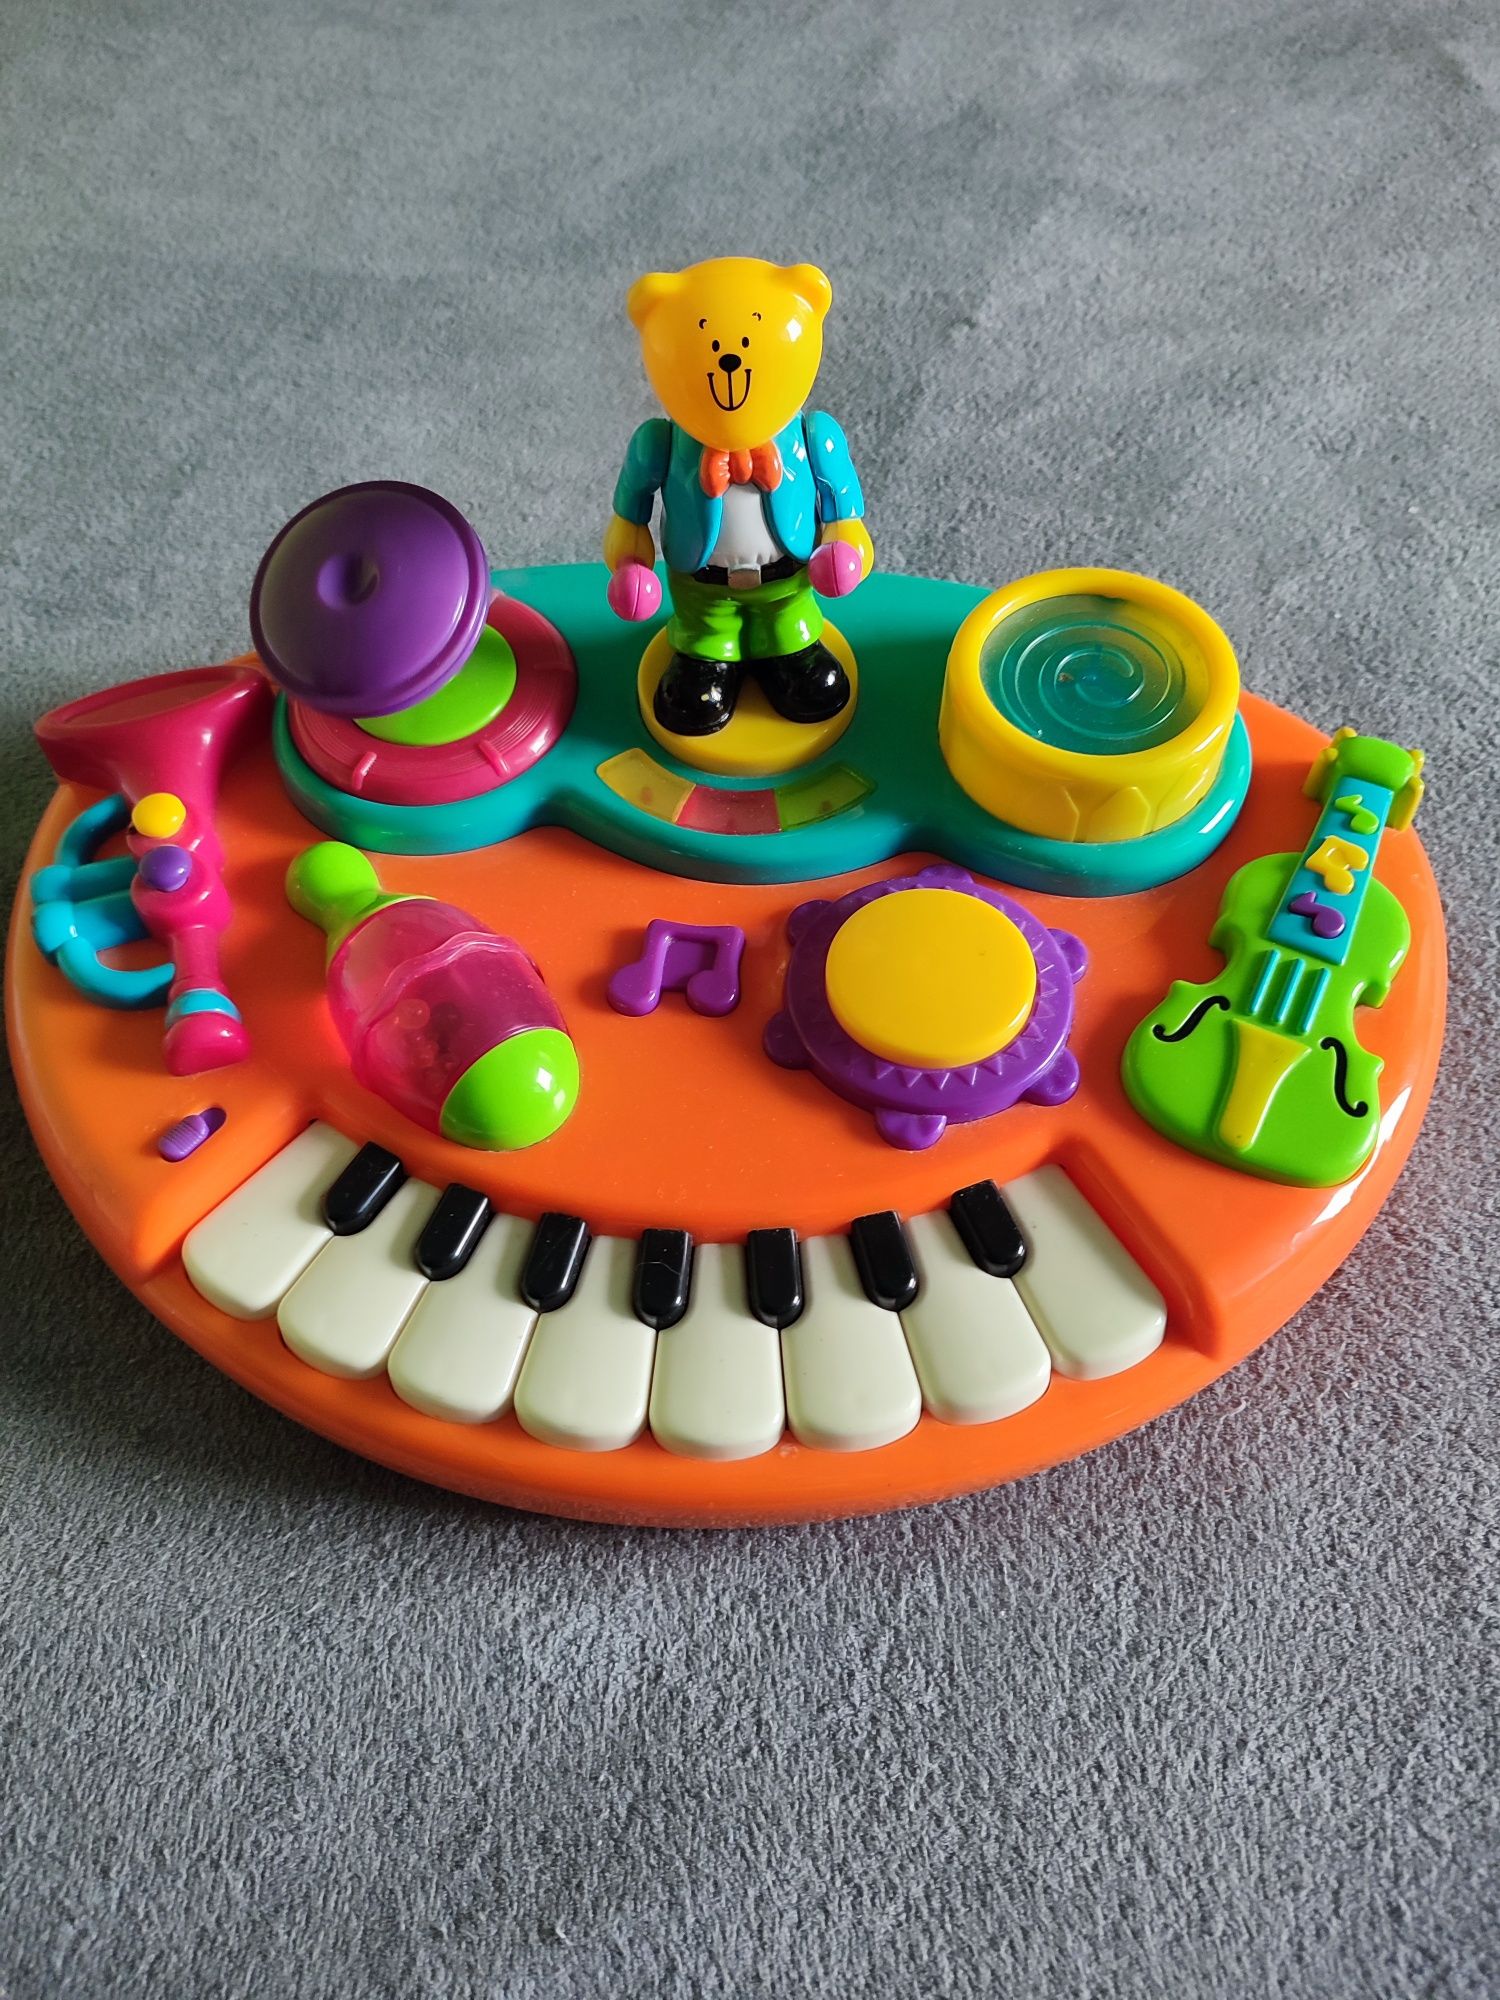 Zabawka pianinko interaktywna.